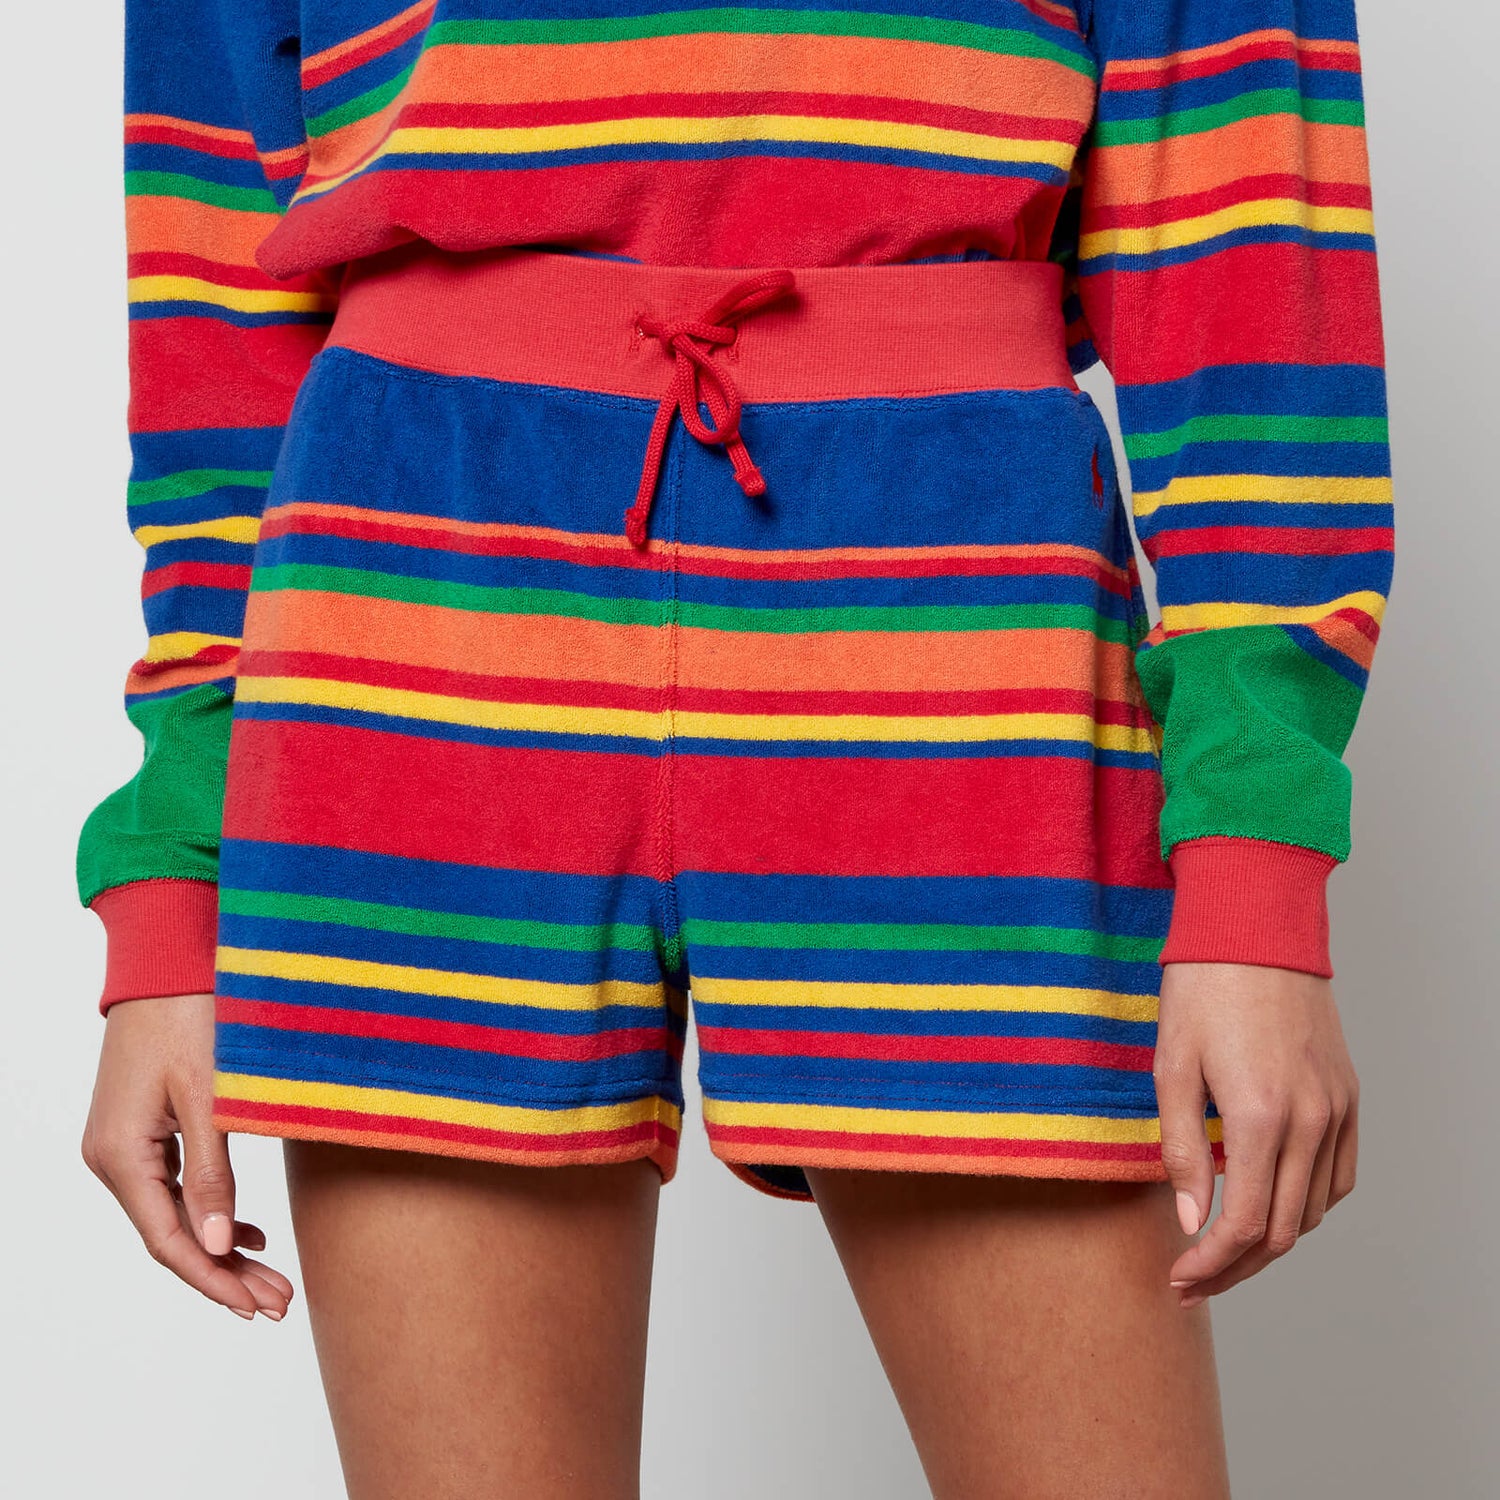 Polo Ralph Lauren Women's Stripe Shorts - Multi - S